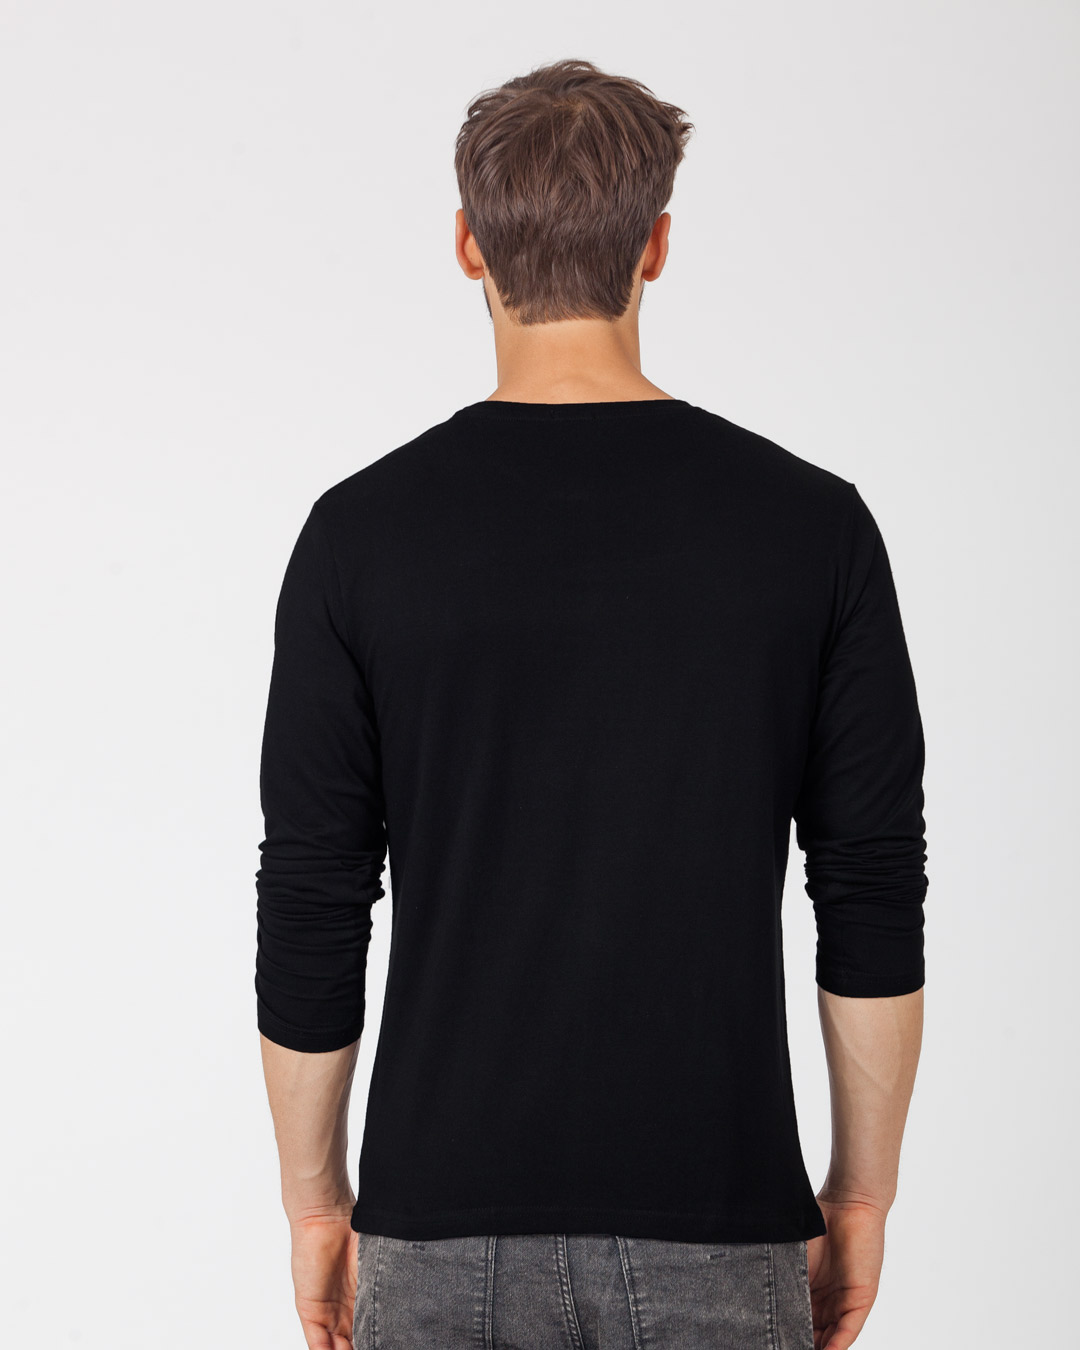 Shop Man Of Steel Emblem Full Sleeve T-Shirt (SL)-Back